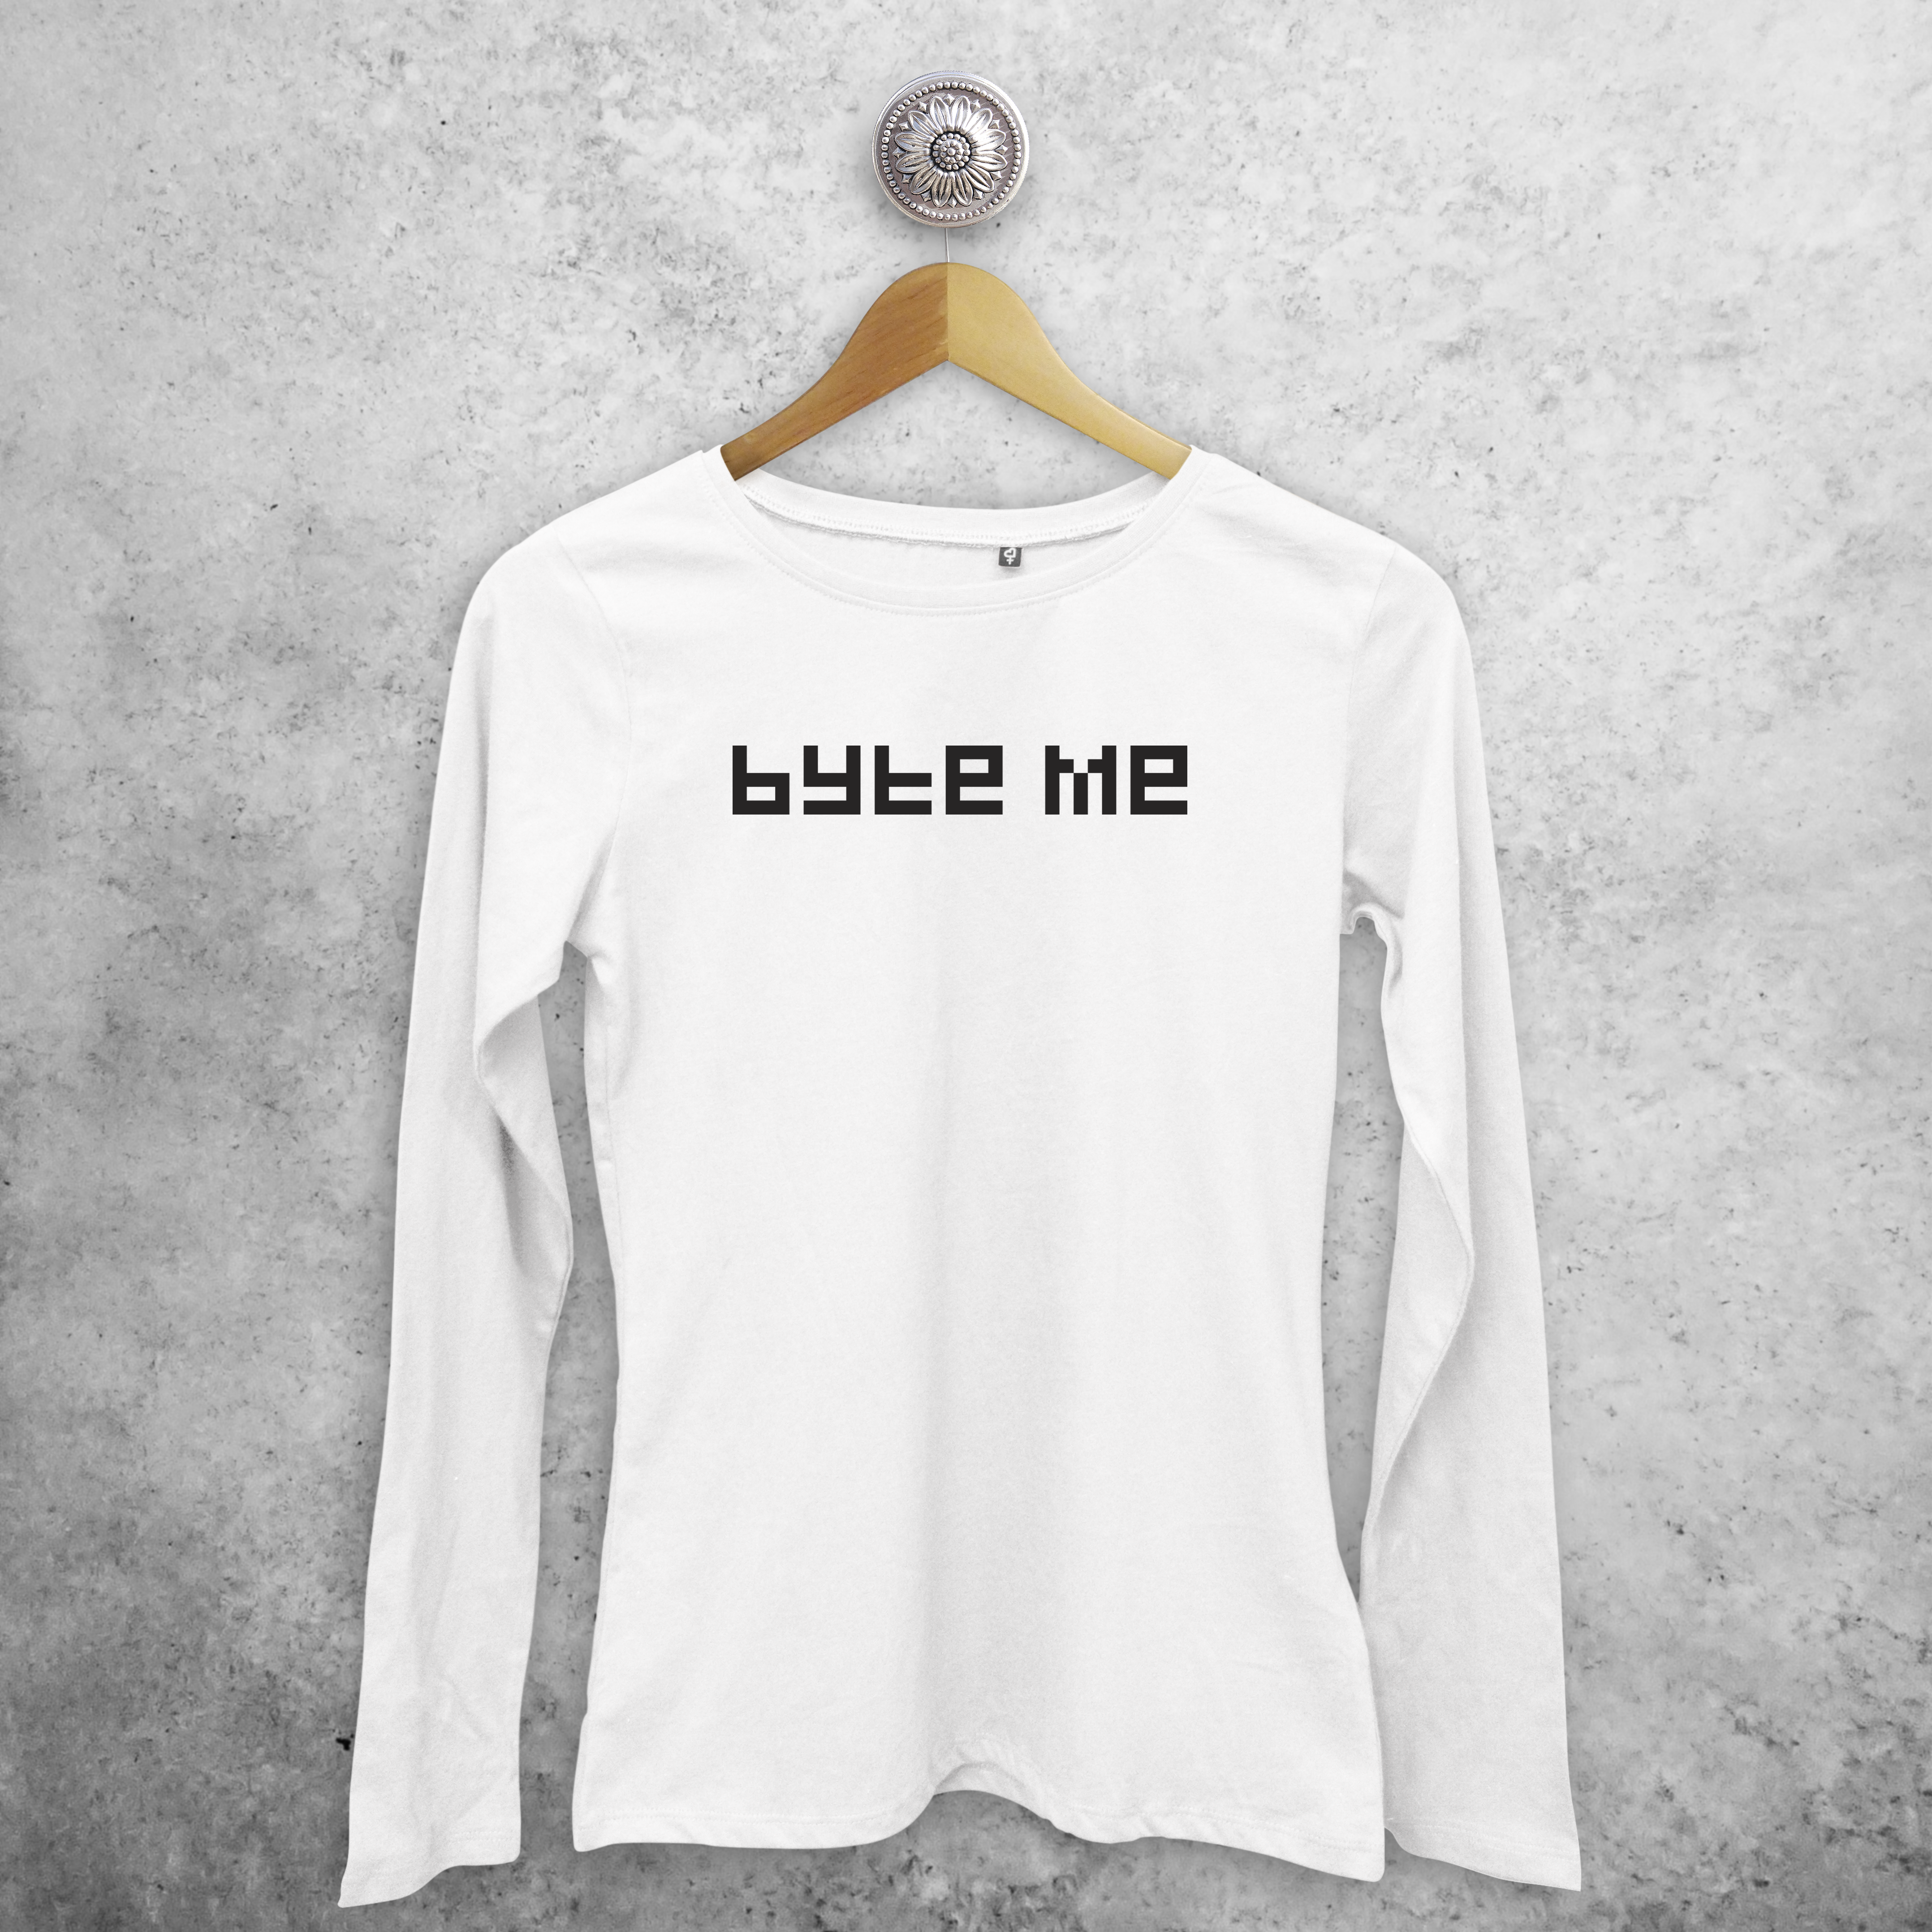 'Byte me' adult longsleeve shirt